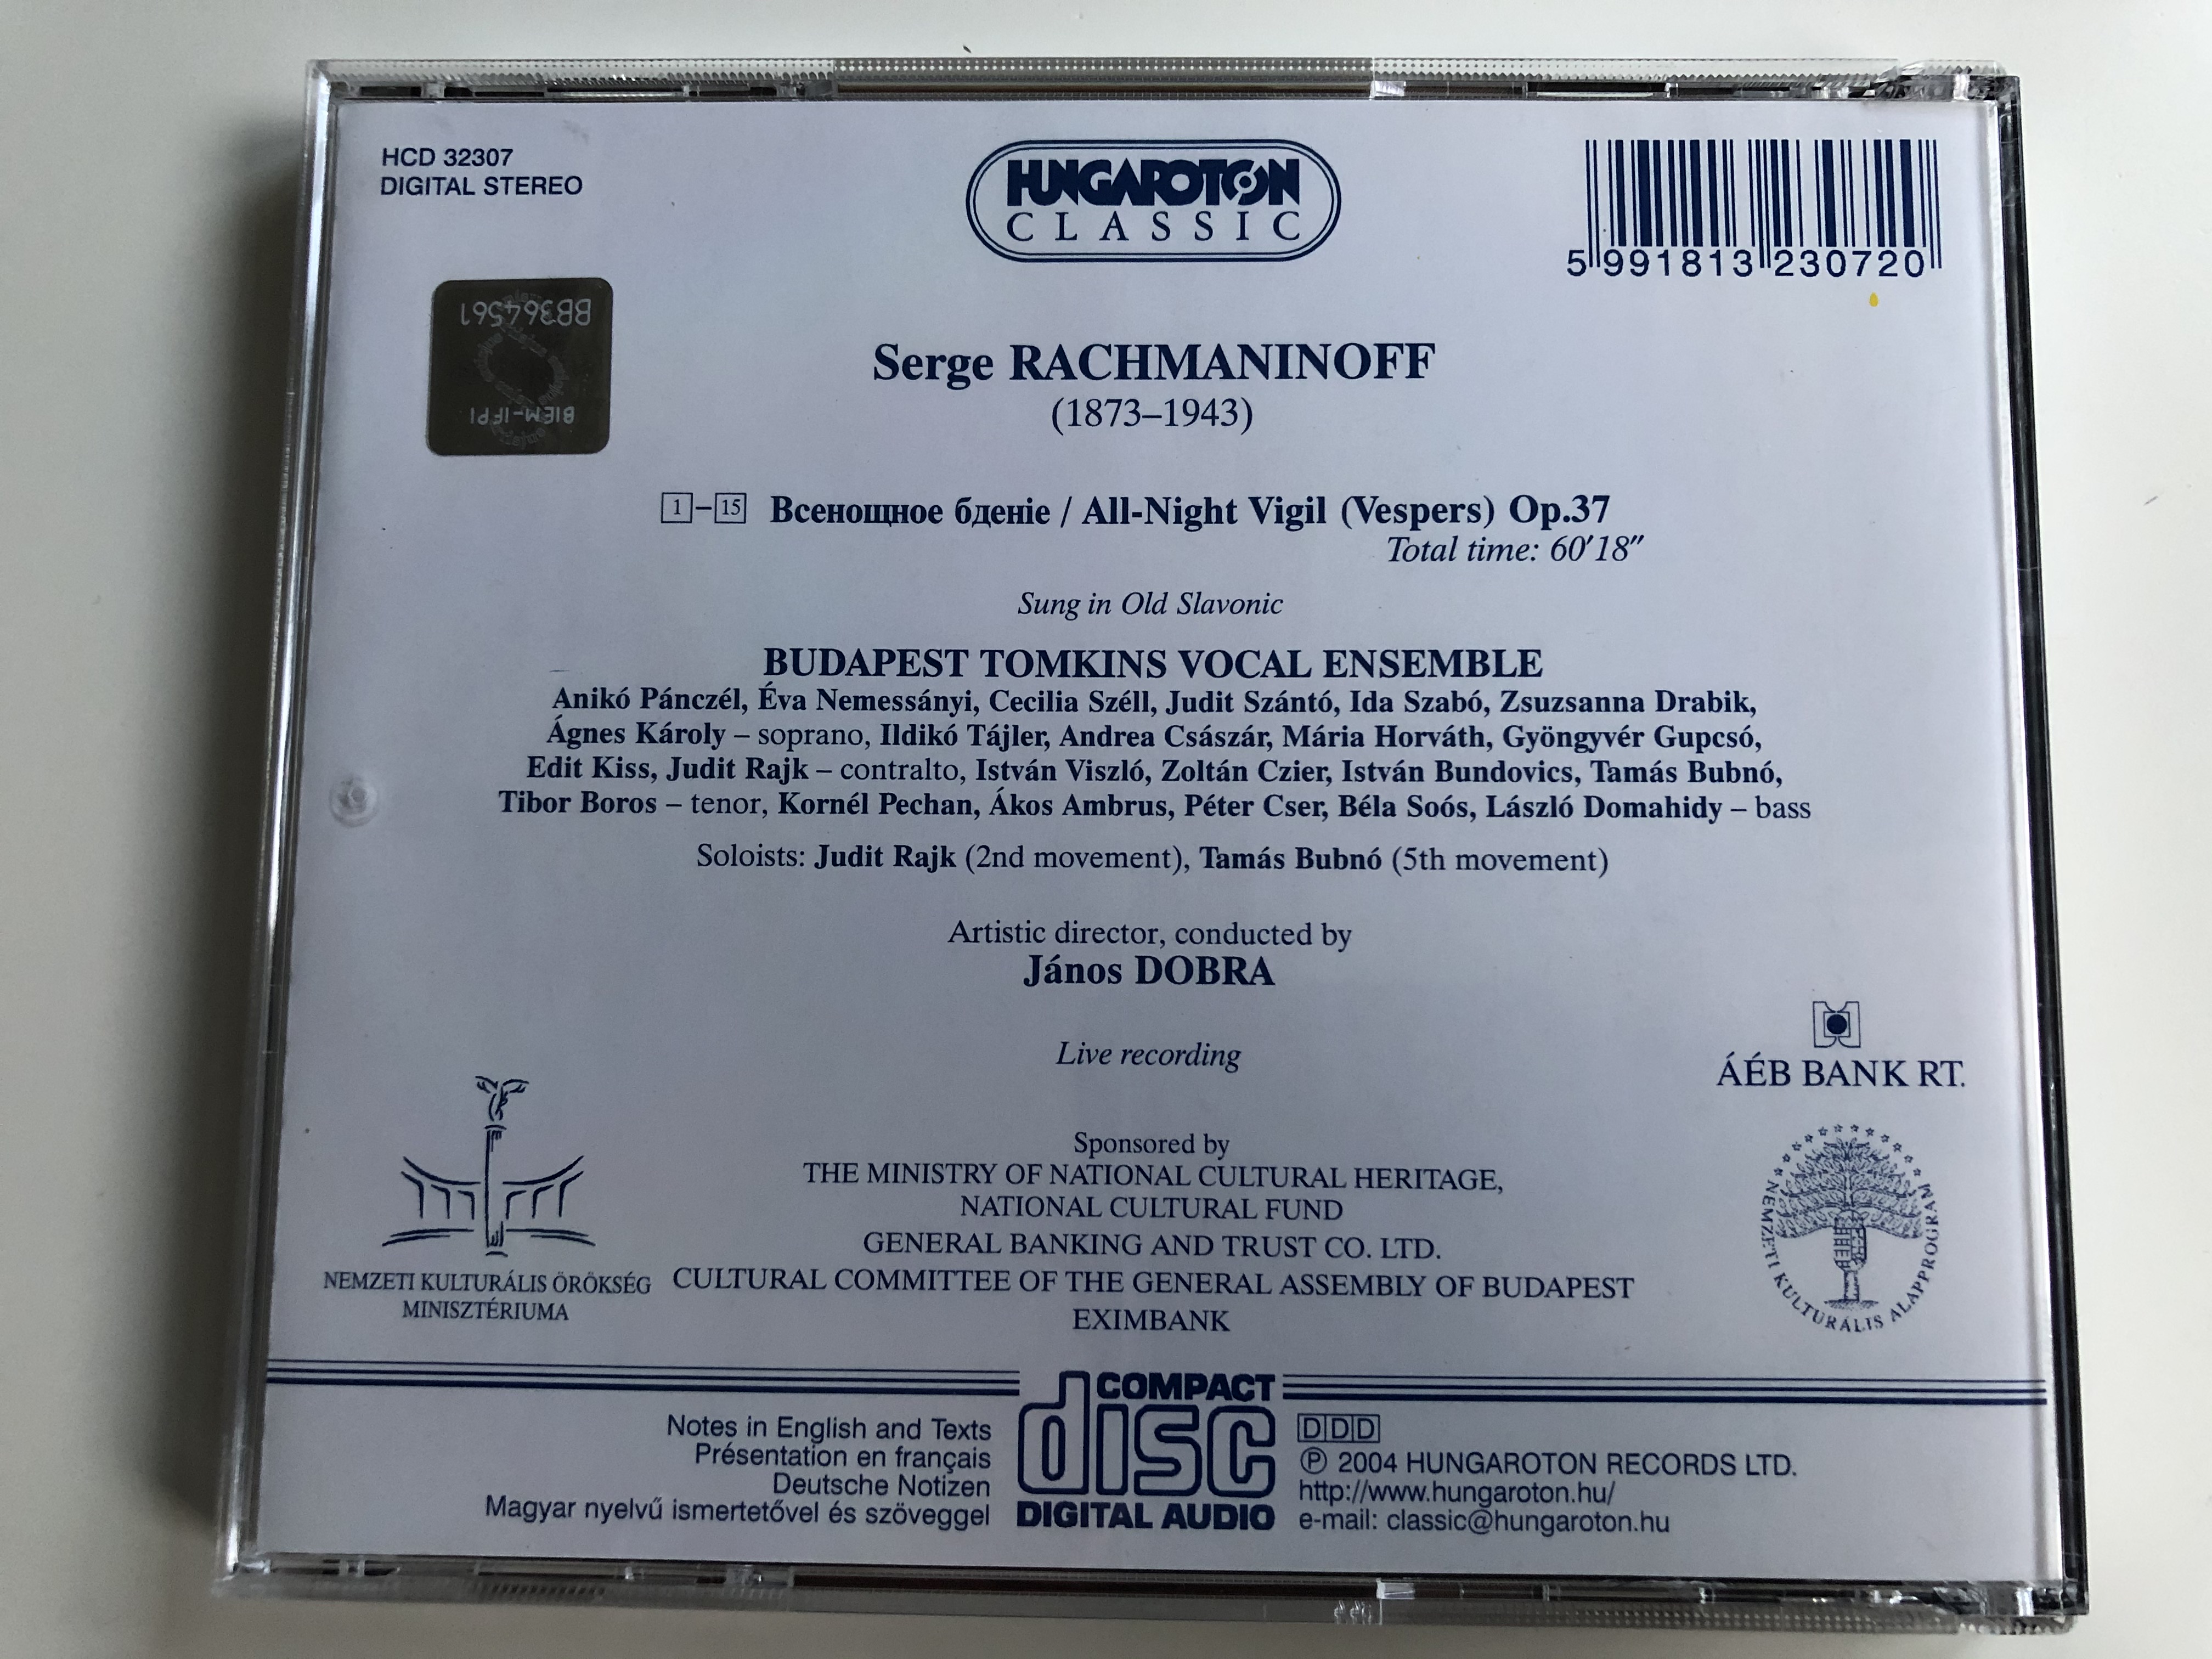 rachmaninoff-vespers-op.-37-budapest-tomkins-vocal-ensemble-janos-dobra-hungaroton-classic-audio-cd-2004-stereo-hcd-32307-10-.jpg